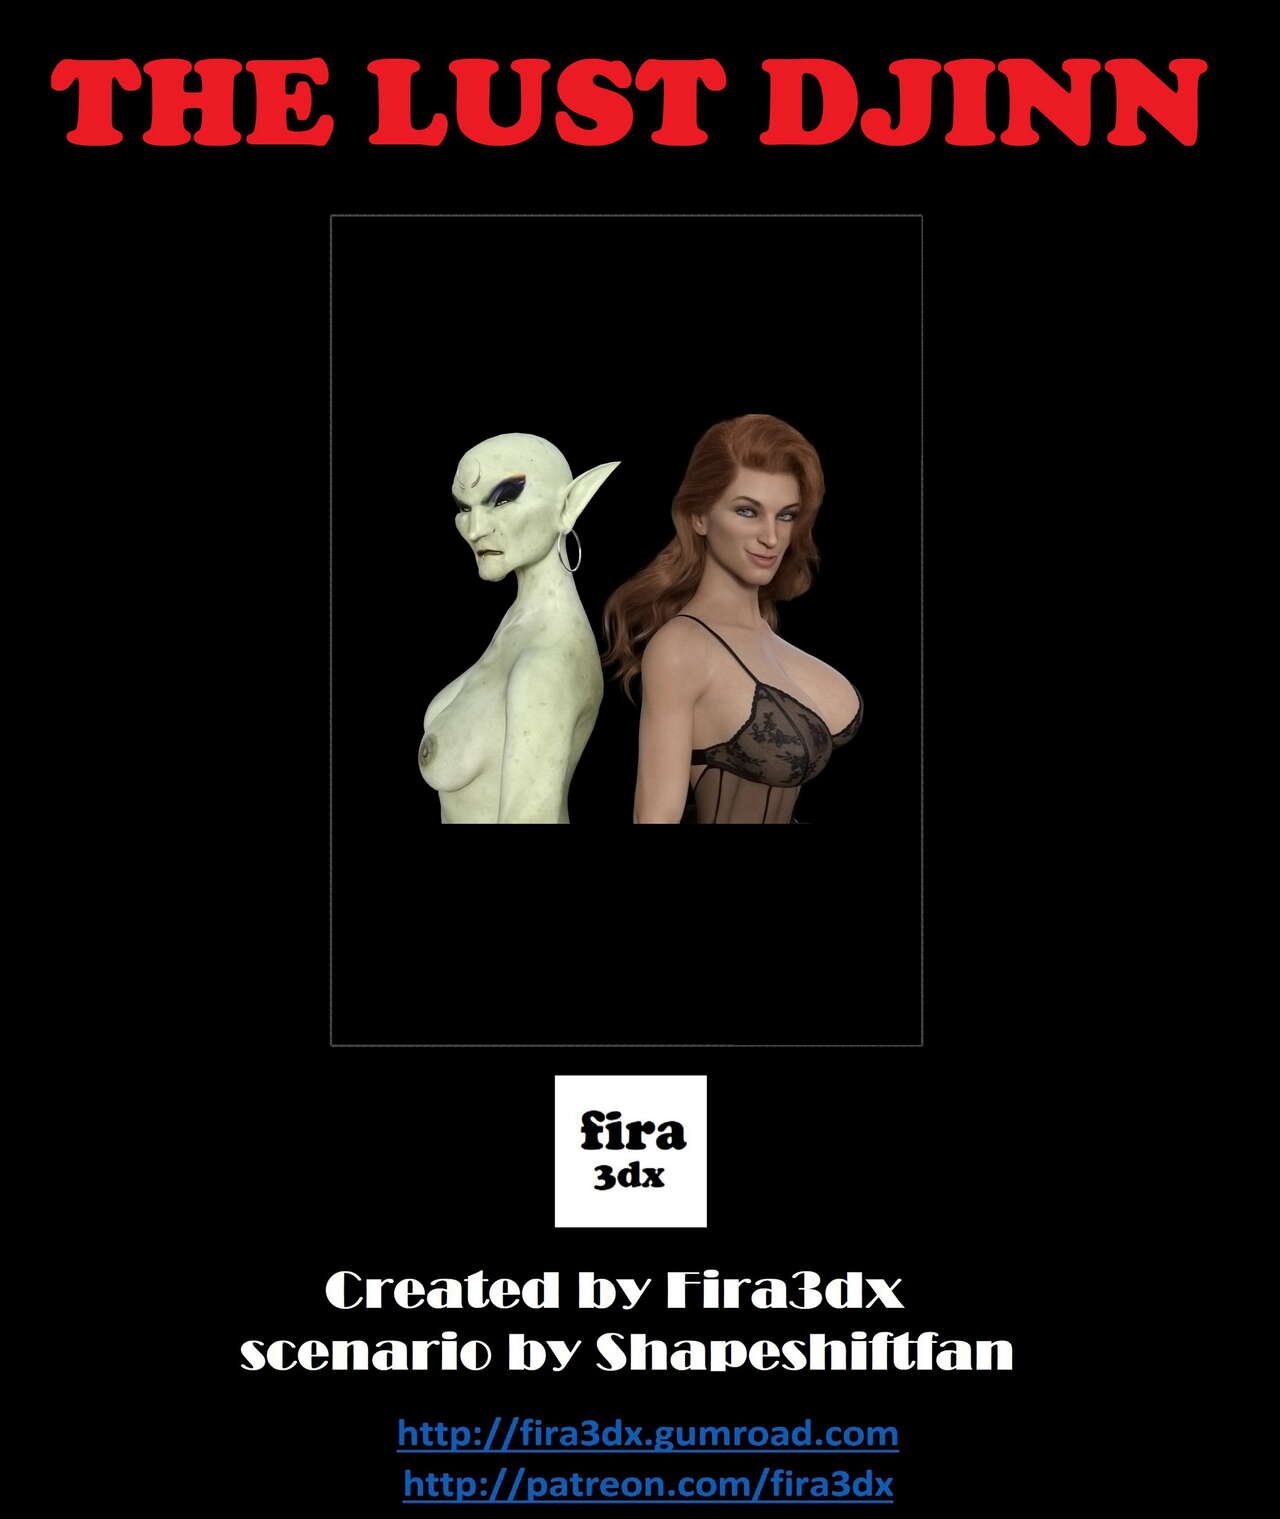 Fira3dx - The Lust Djinn (English) porn comic (fira3dx) 41 images. Bbm porn  comics.